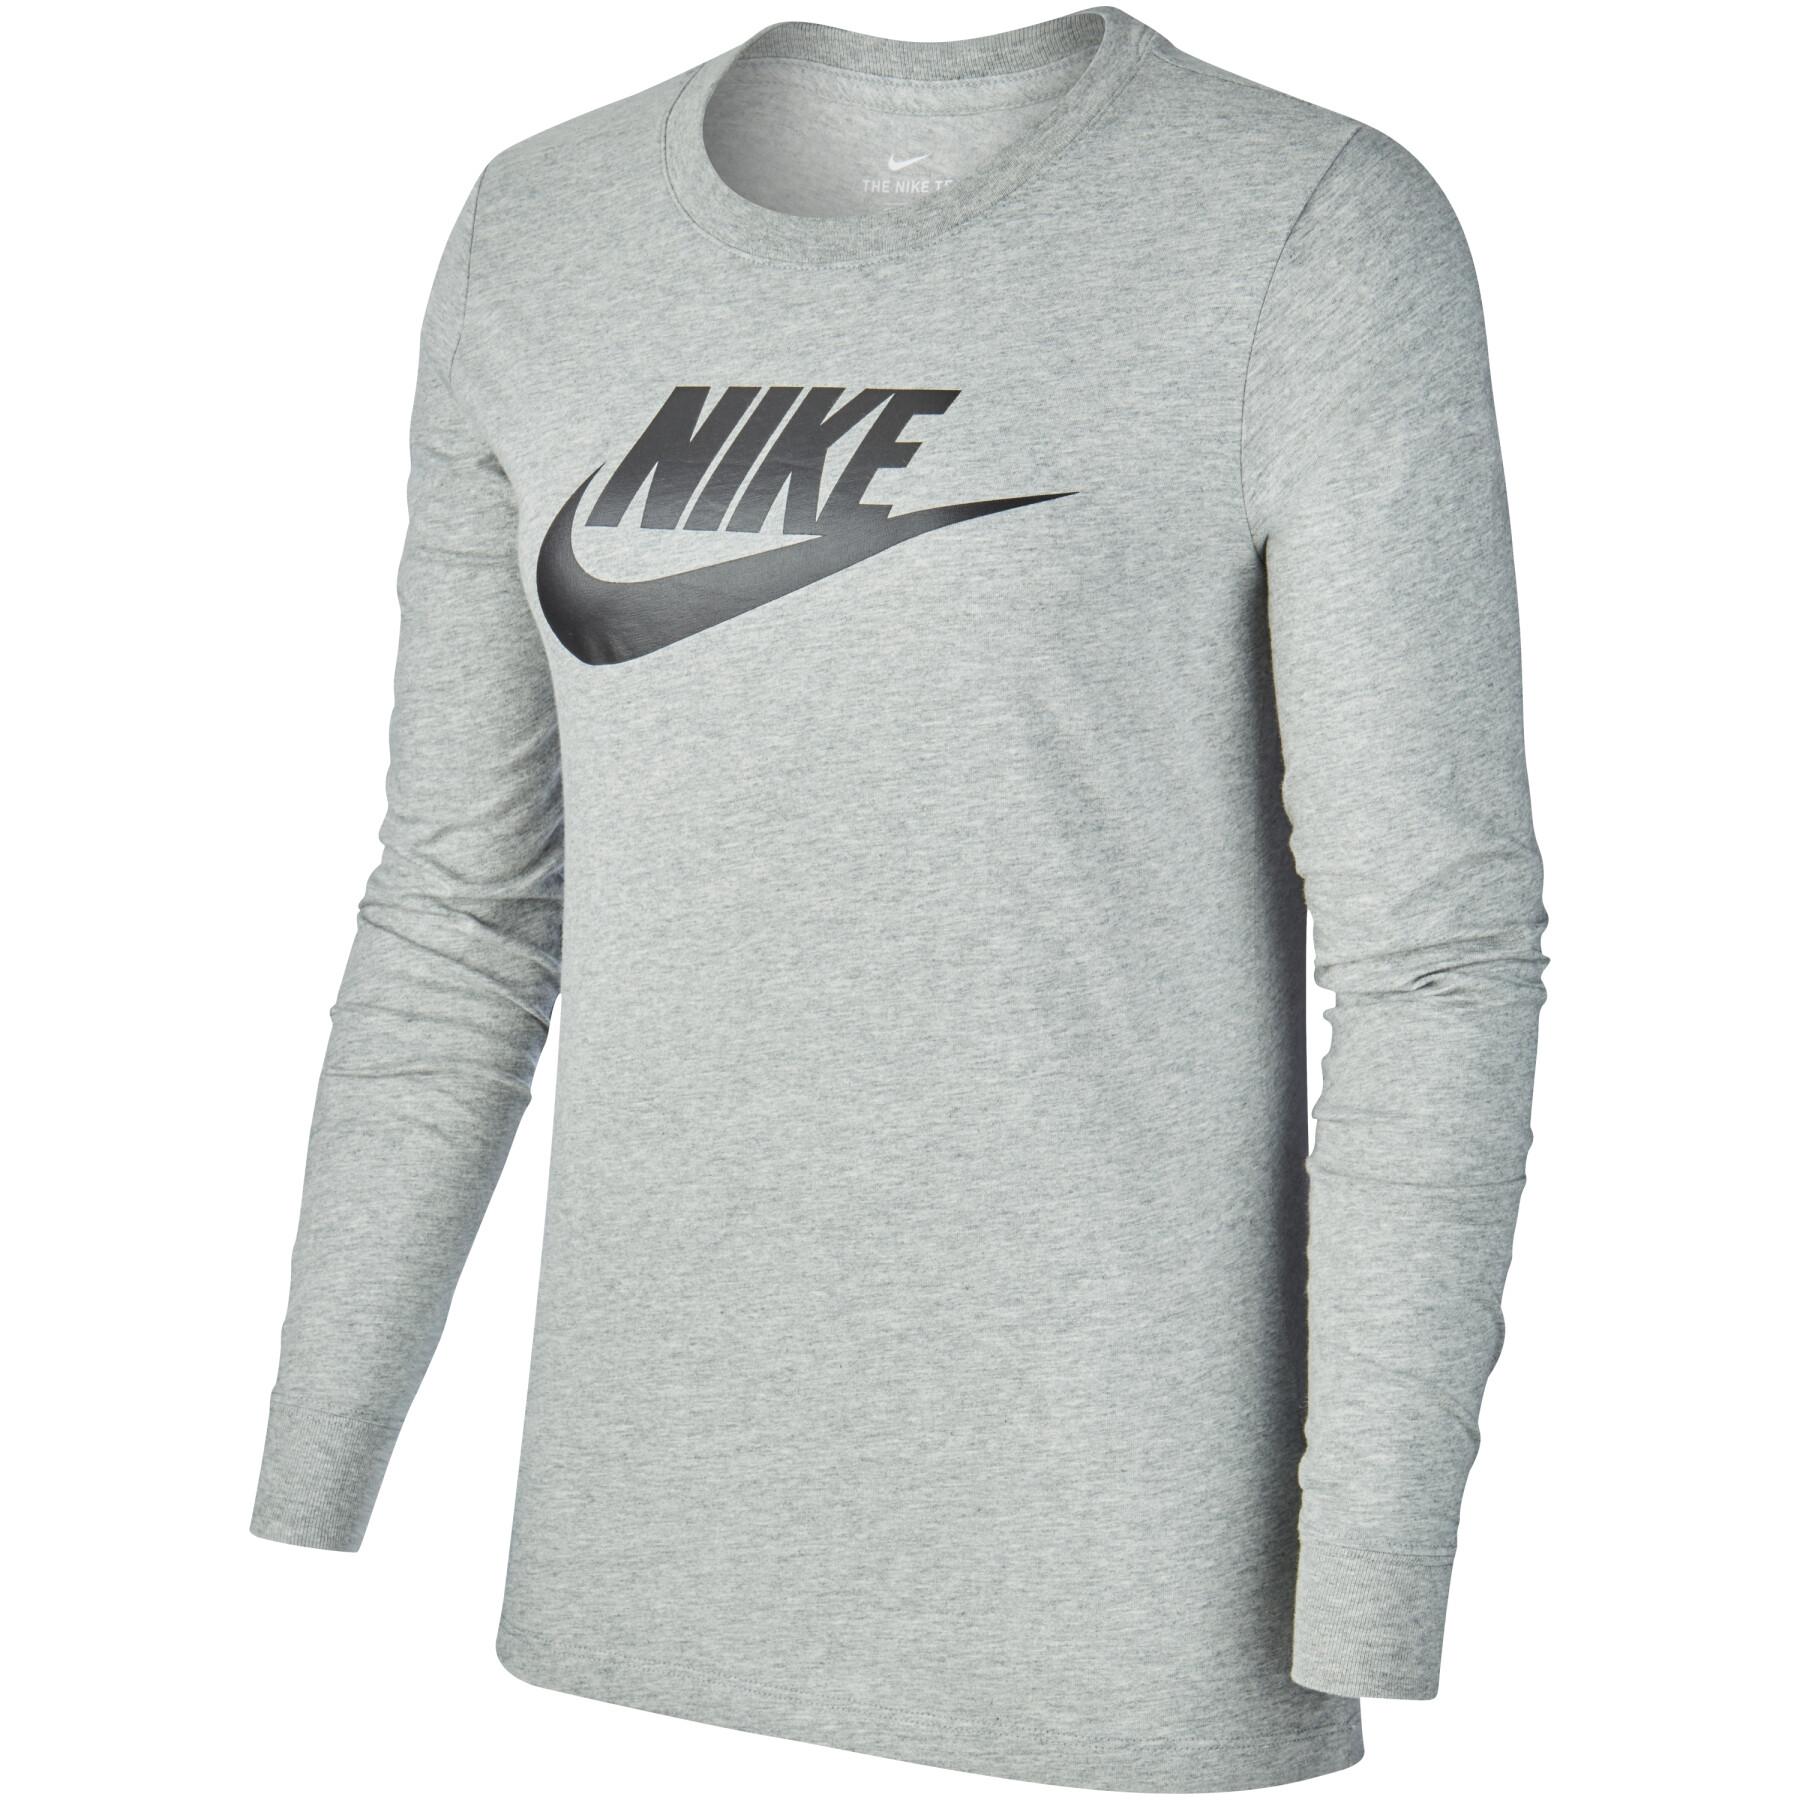 Frauen-T-Shirt Nike sportswear